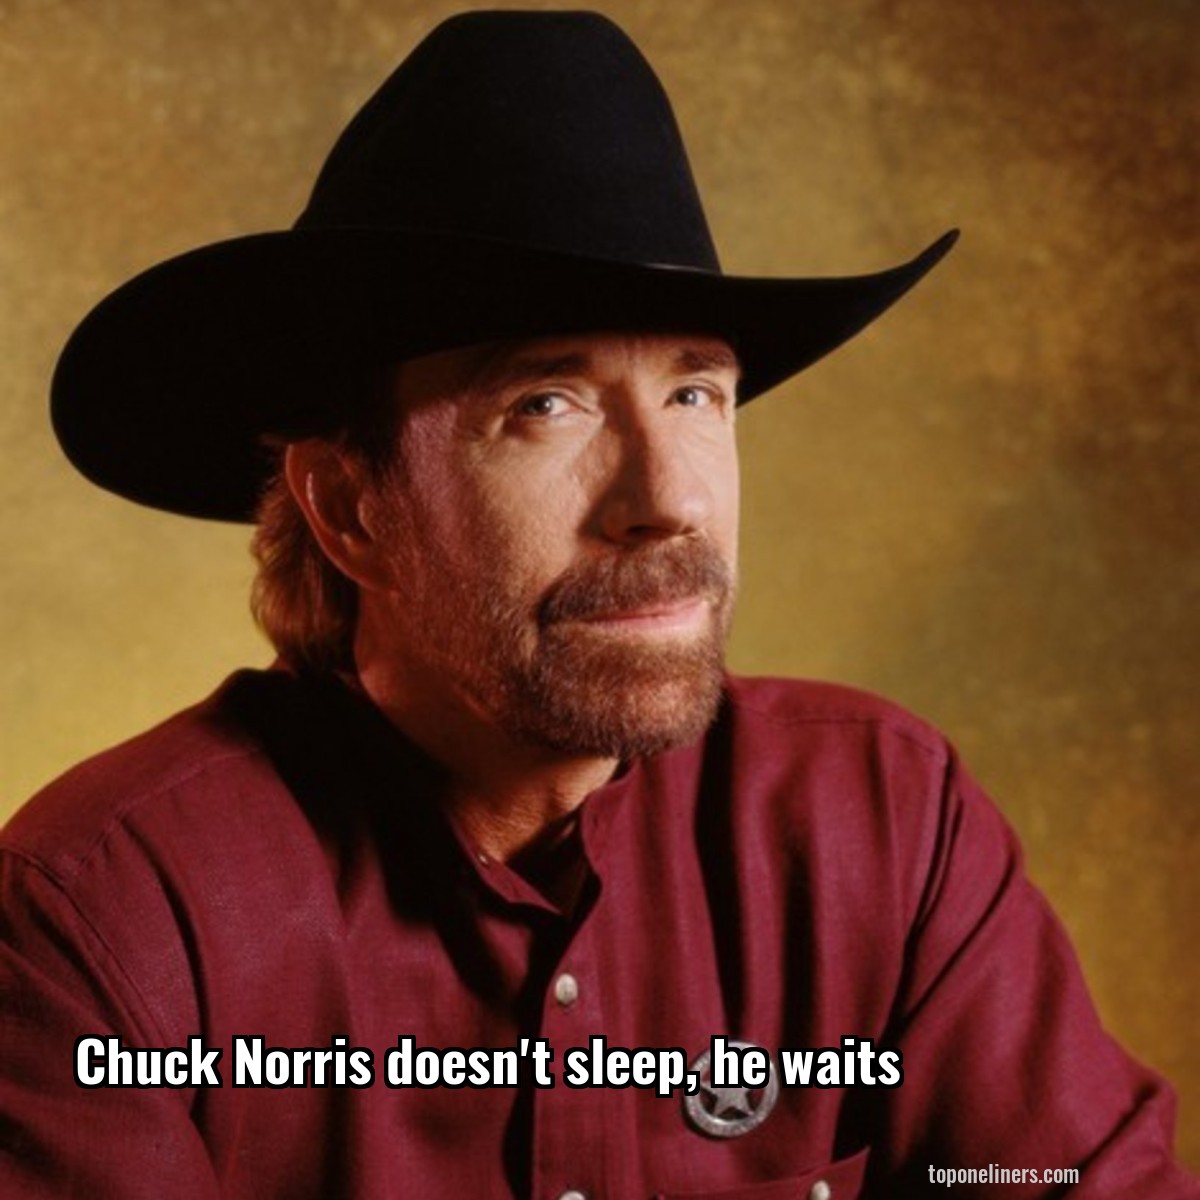 Chuck Norris doesn't sleep, he waits